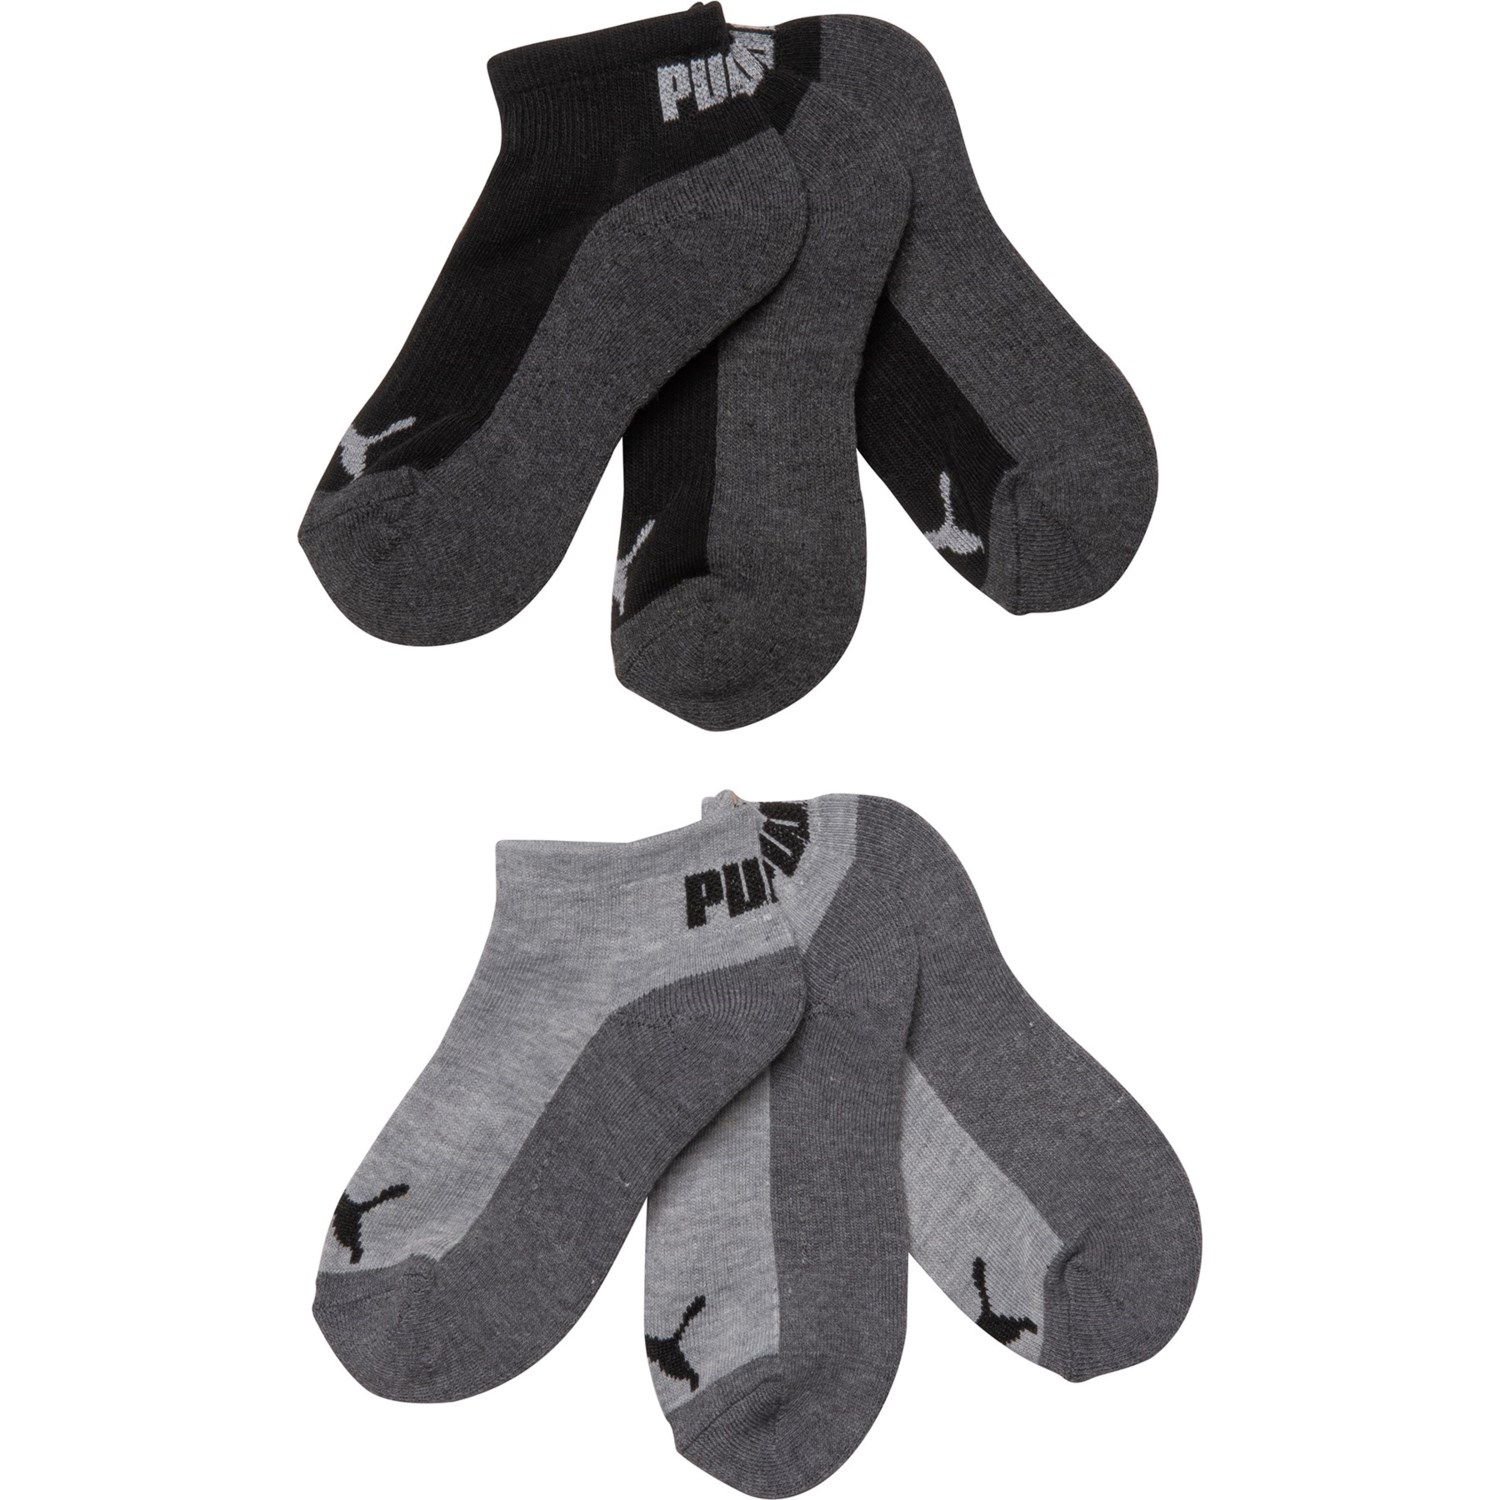 Puma Sport Performance Socks (For Boys) - Save 33%